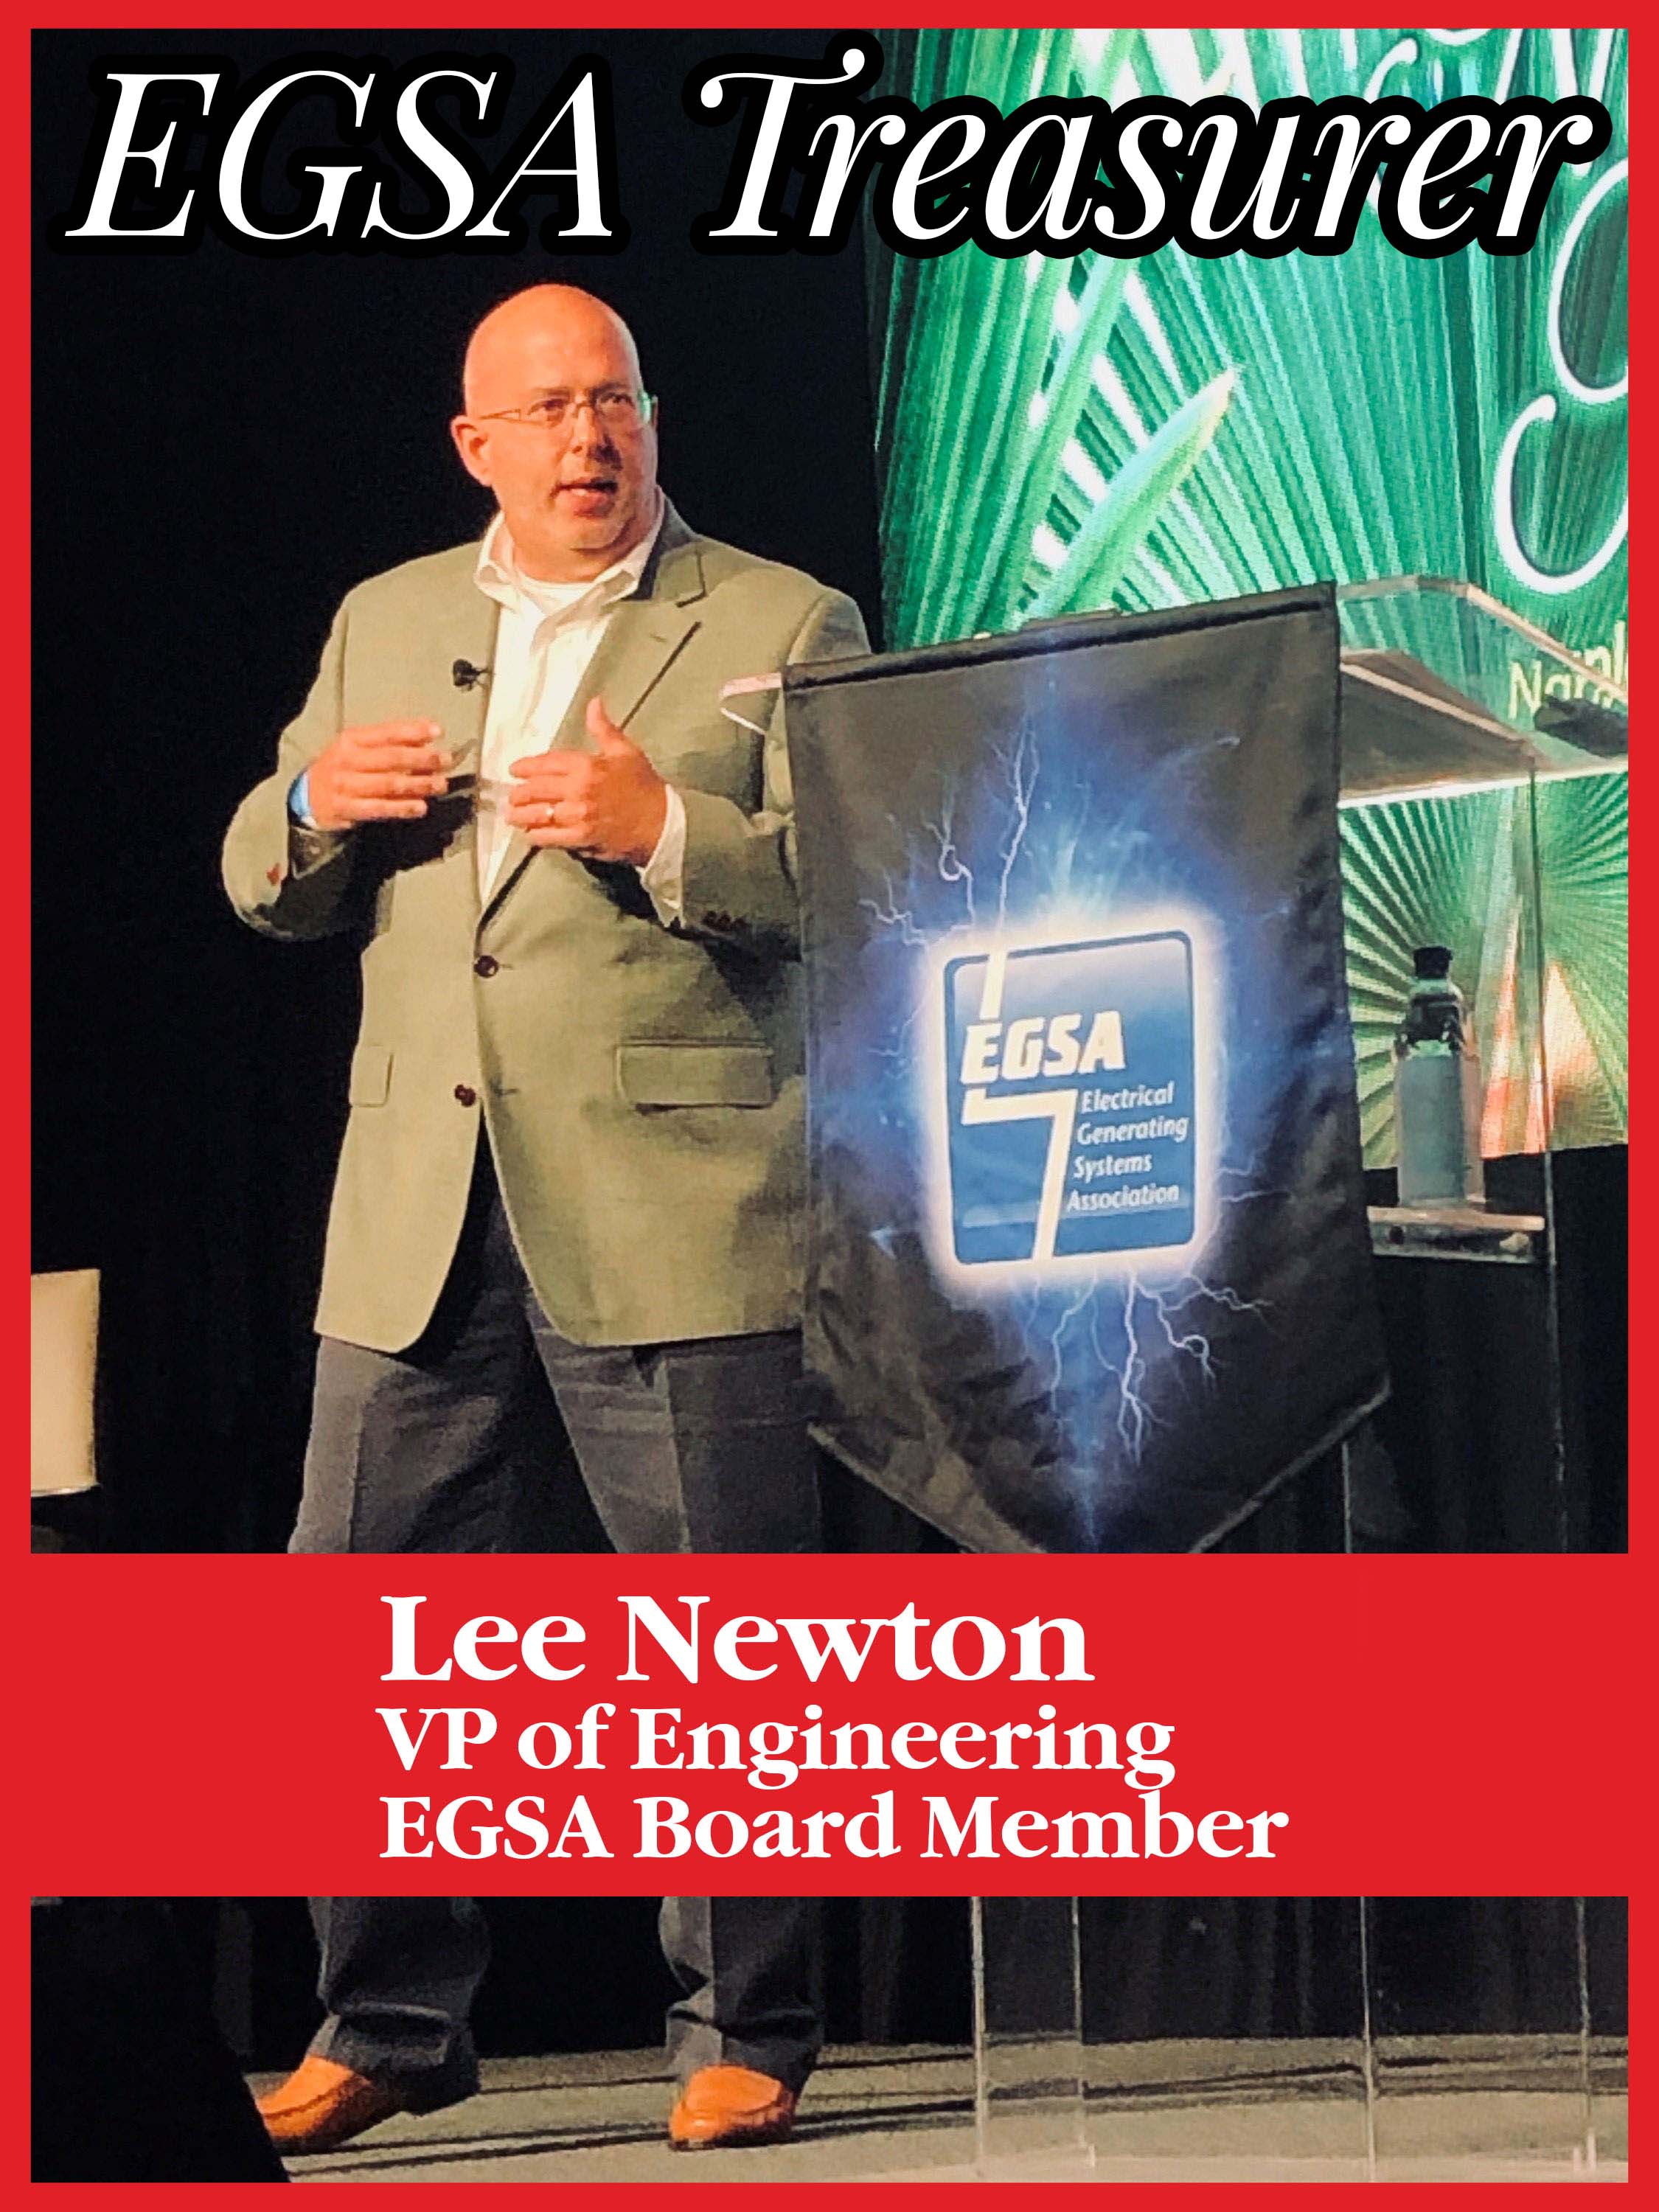 VP Lee Newton, EGSA Treasurer!